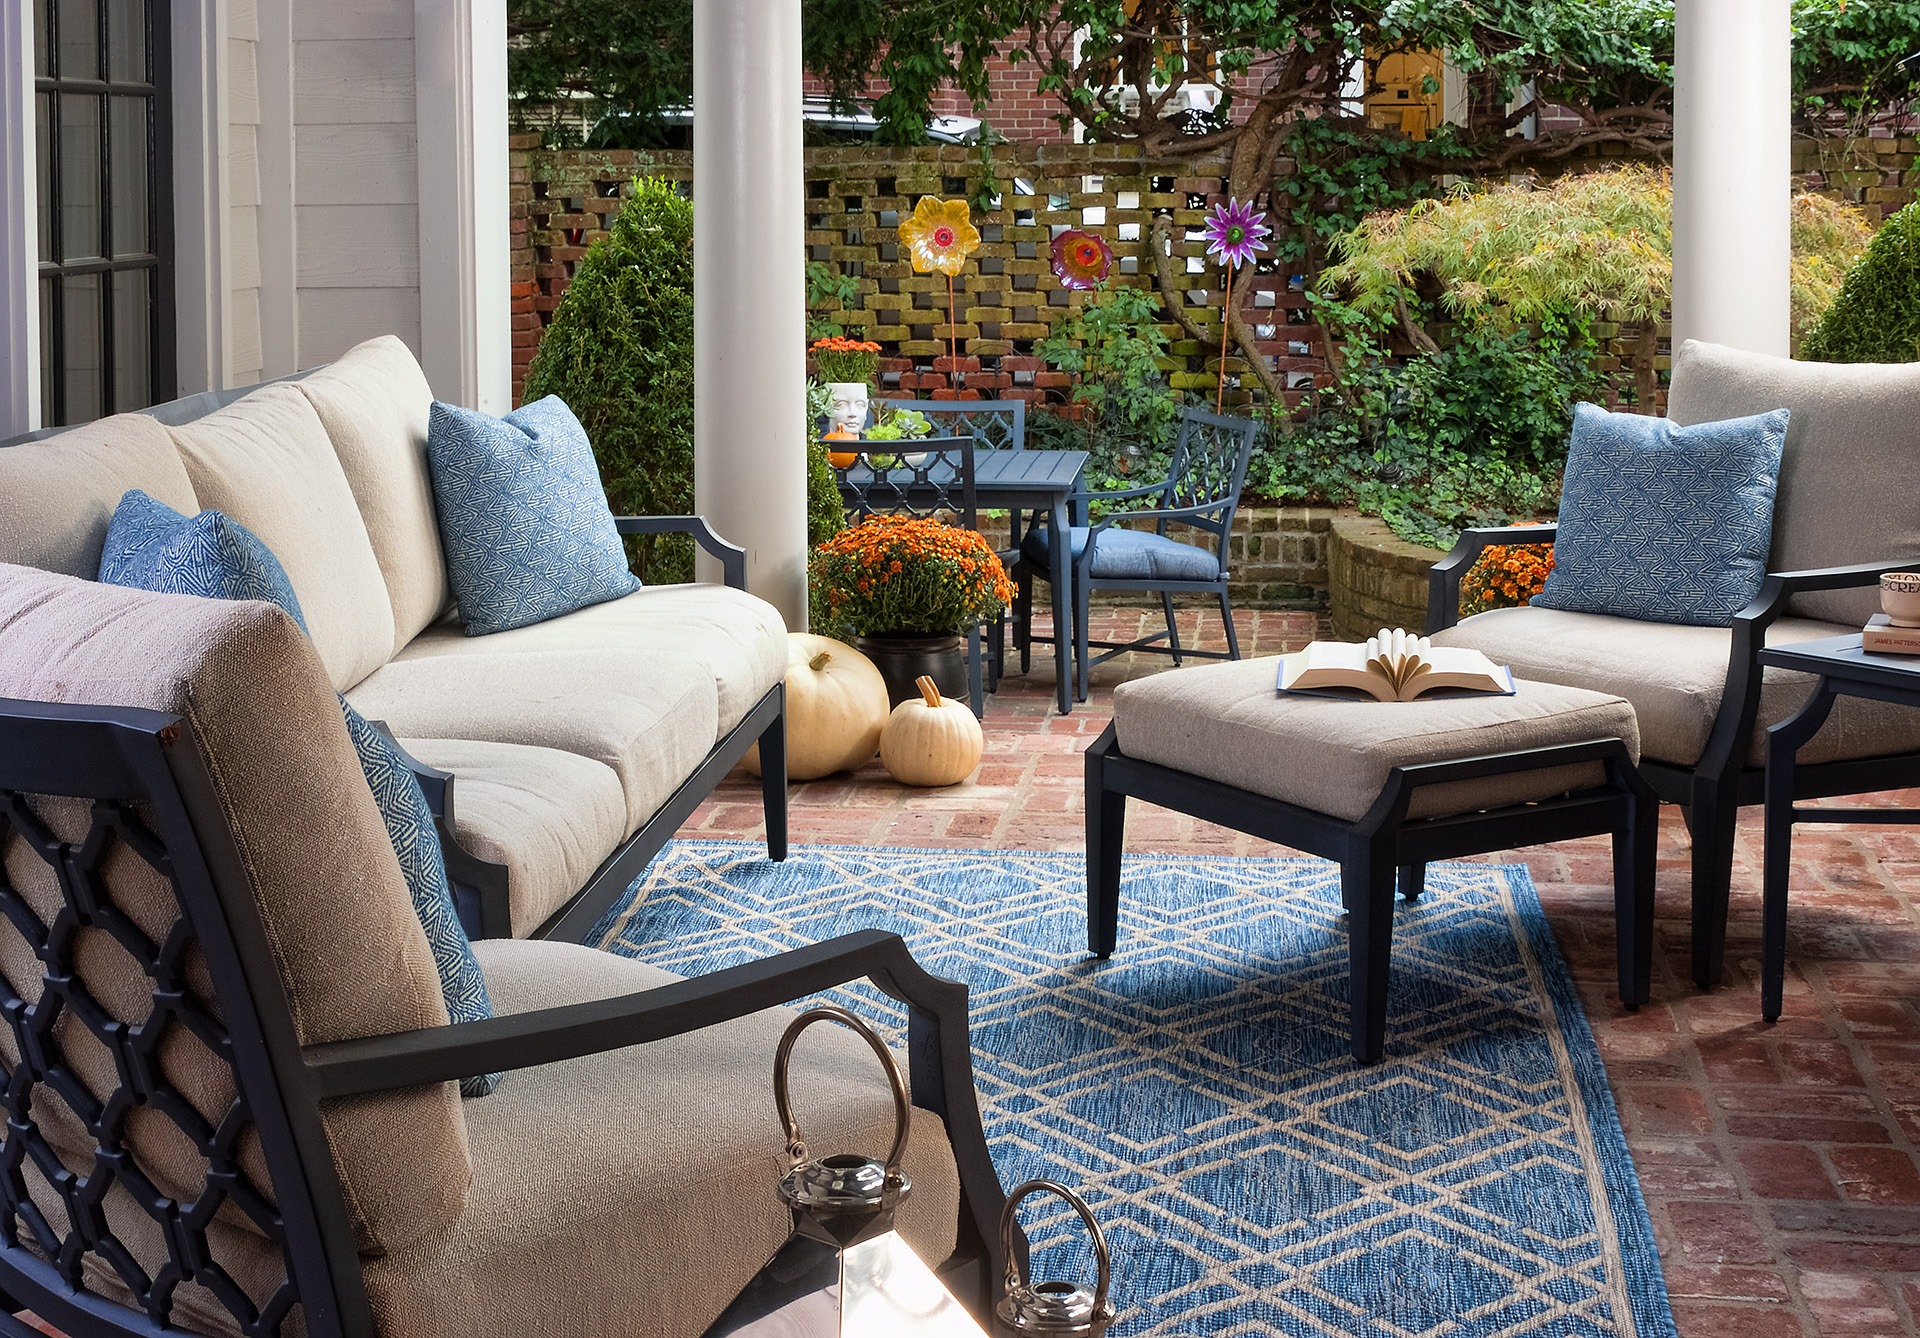 Fall-inspired patio decor tips